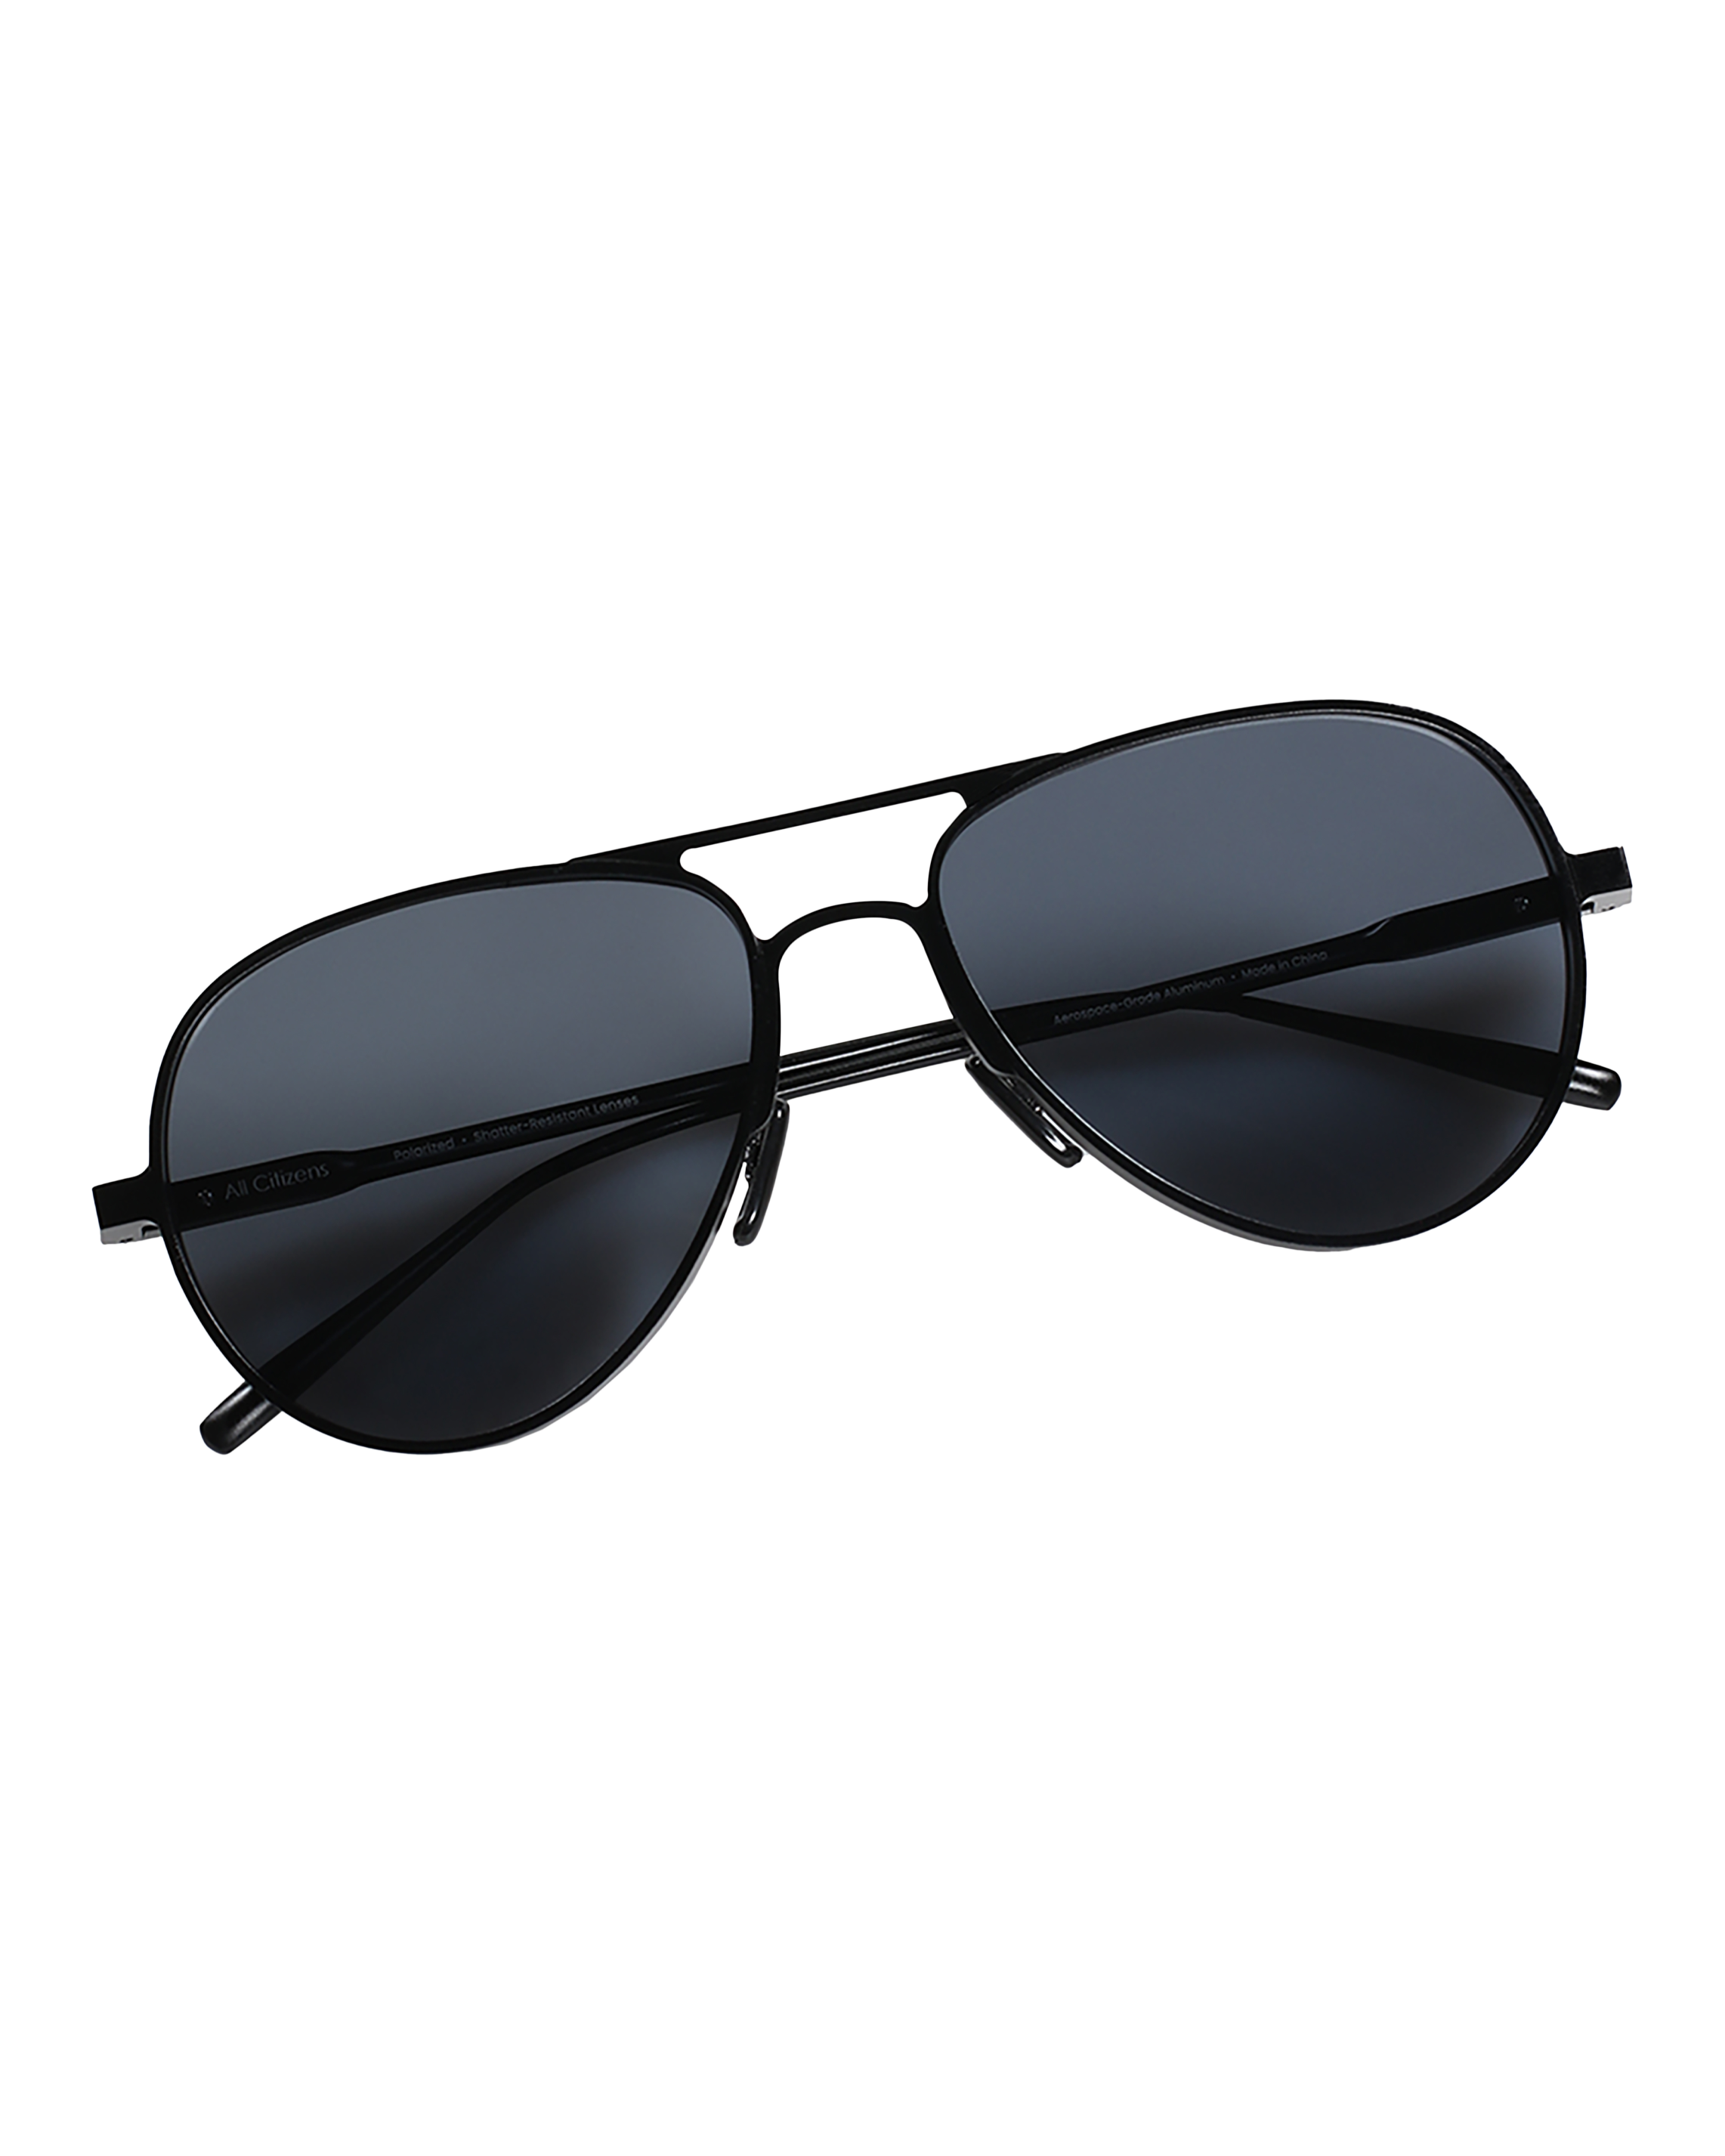 Lafayette Aviators - Premium Polarized Men's Sunglasses - , Aerospace-Grade Aluminum | by All Citizens | Matte Black